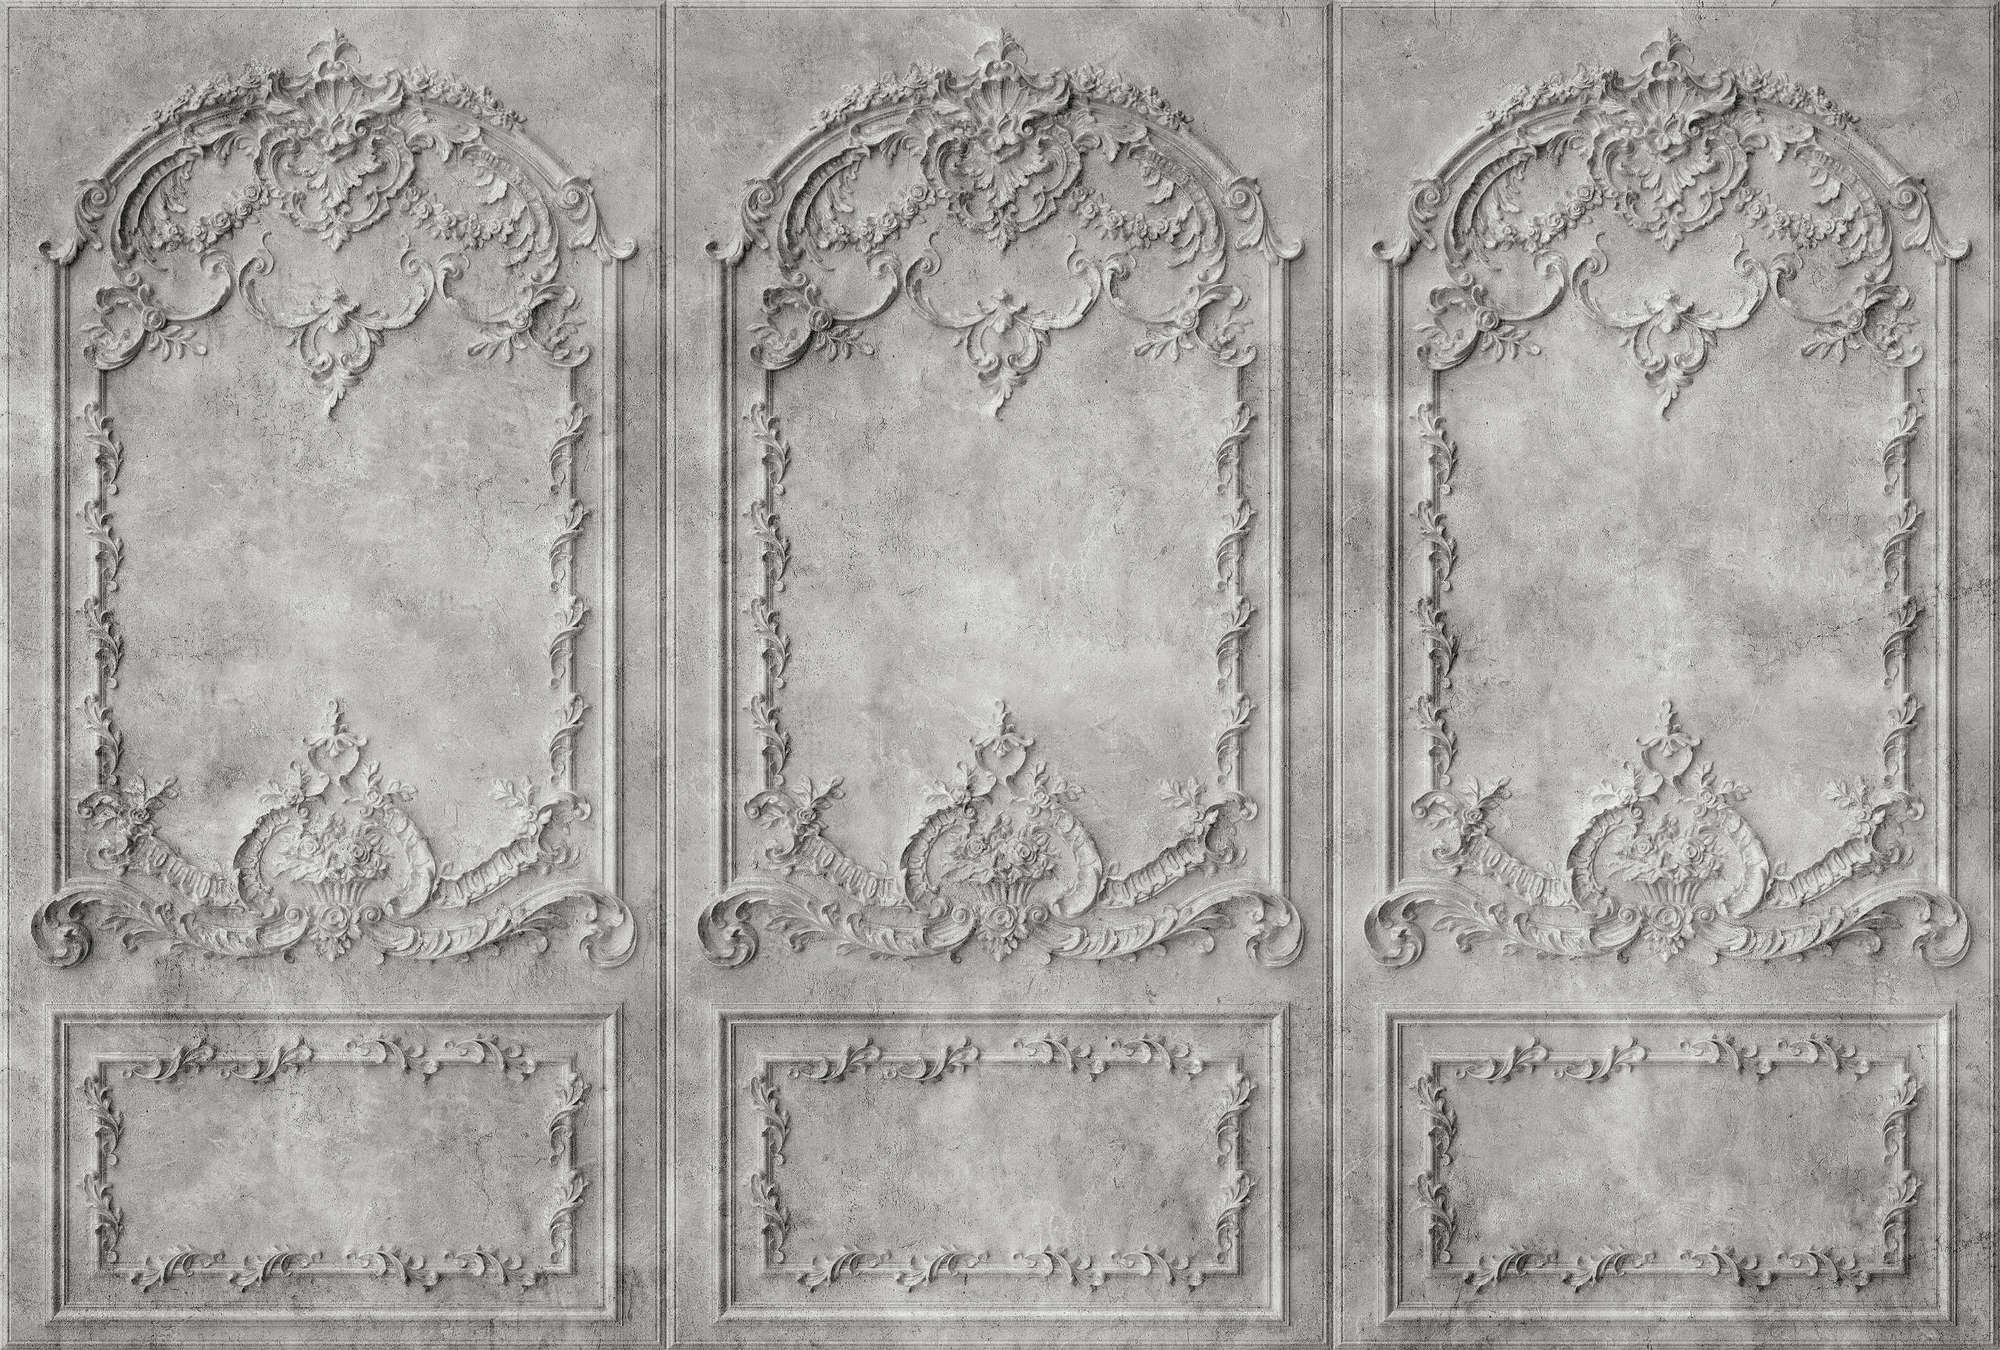             Papel Pintado Versailles 2 - Paneles de Madera de Estilo Barroco Gris
        